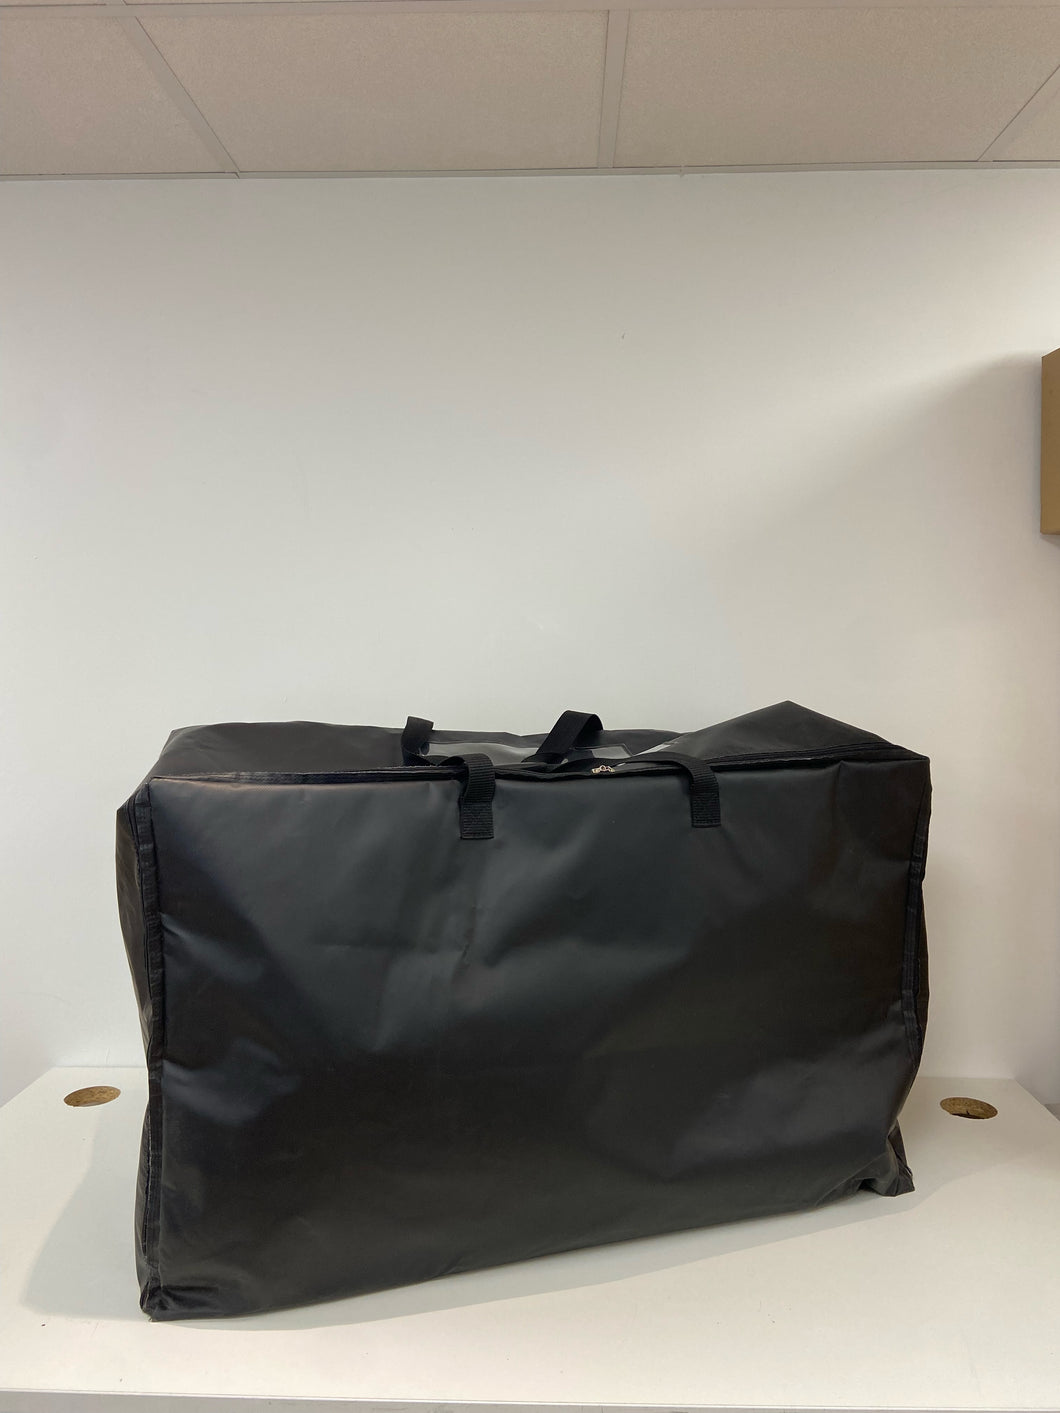 Trailer / Stroller / Pushchair Carry Bag